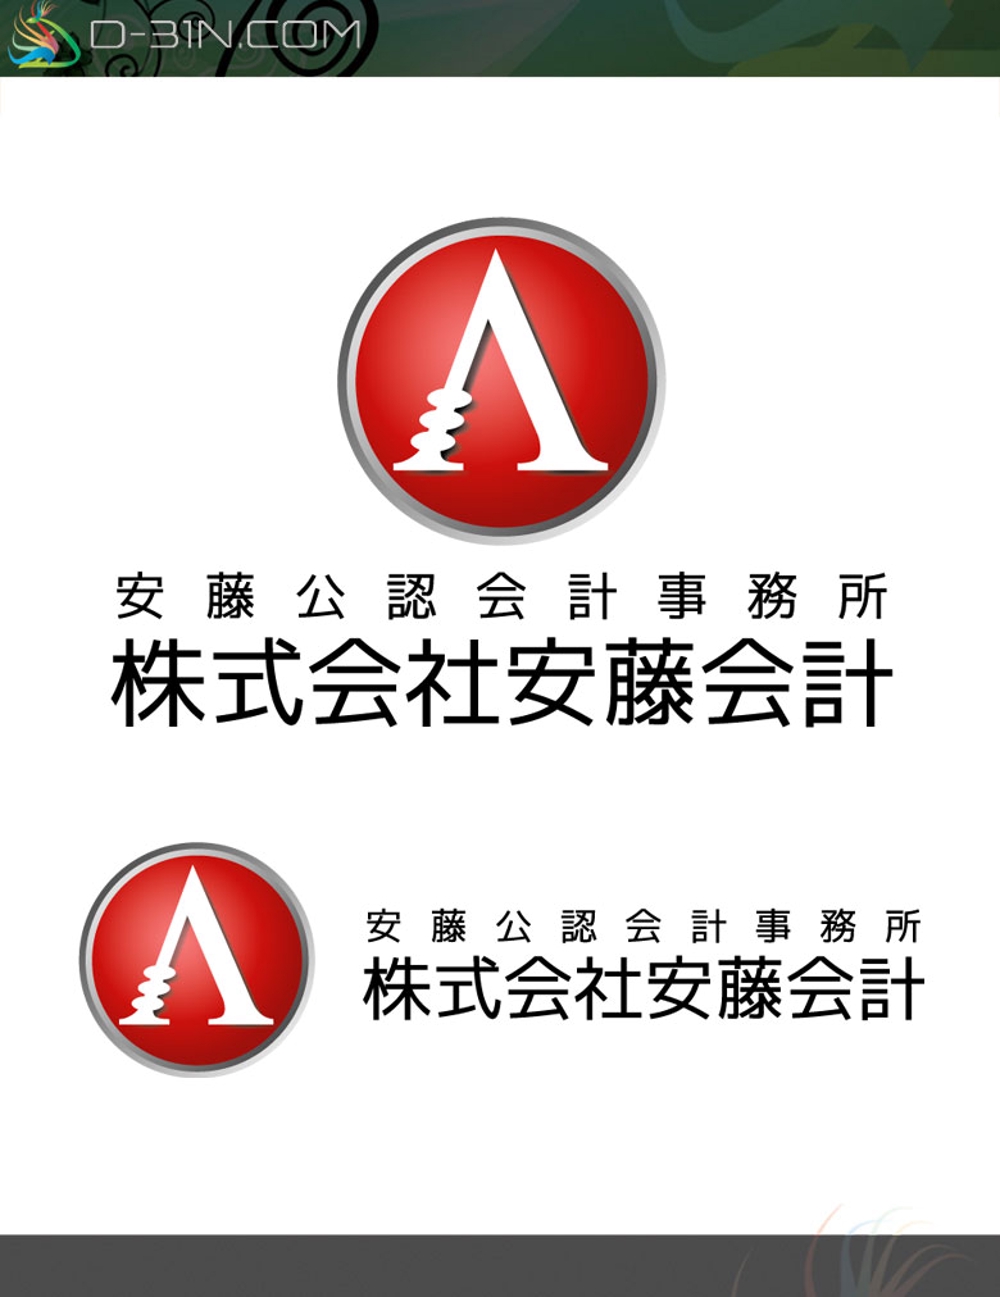 ando-logo01.jpg